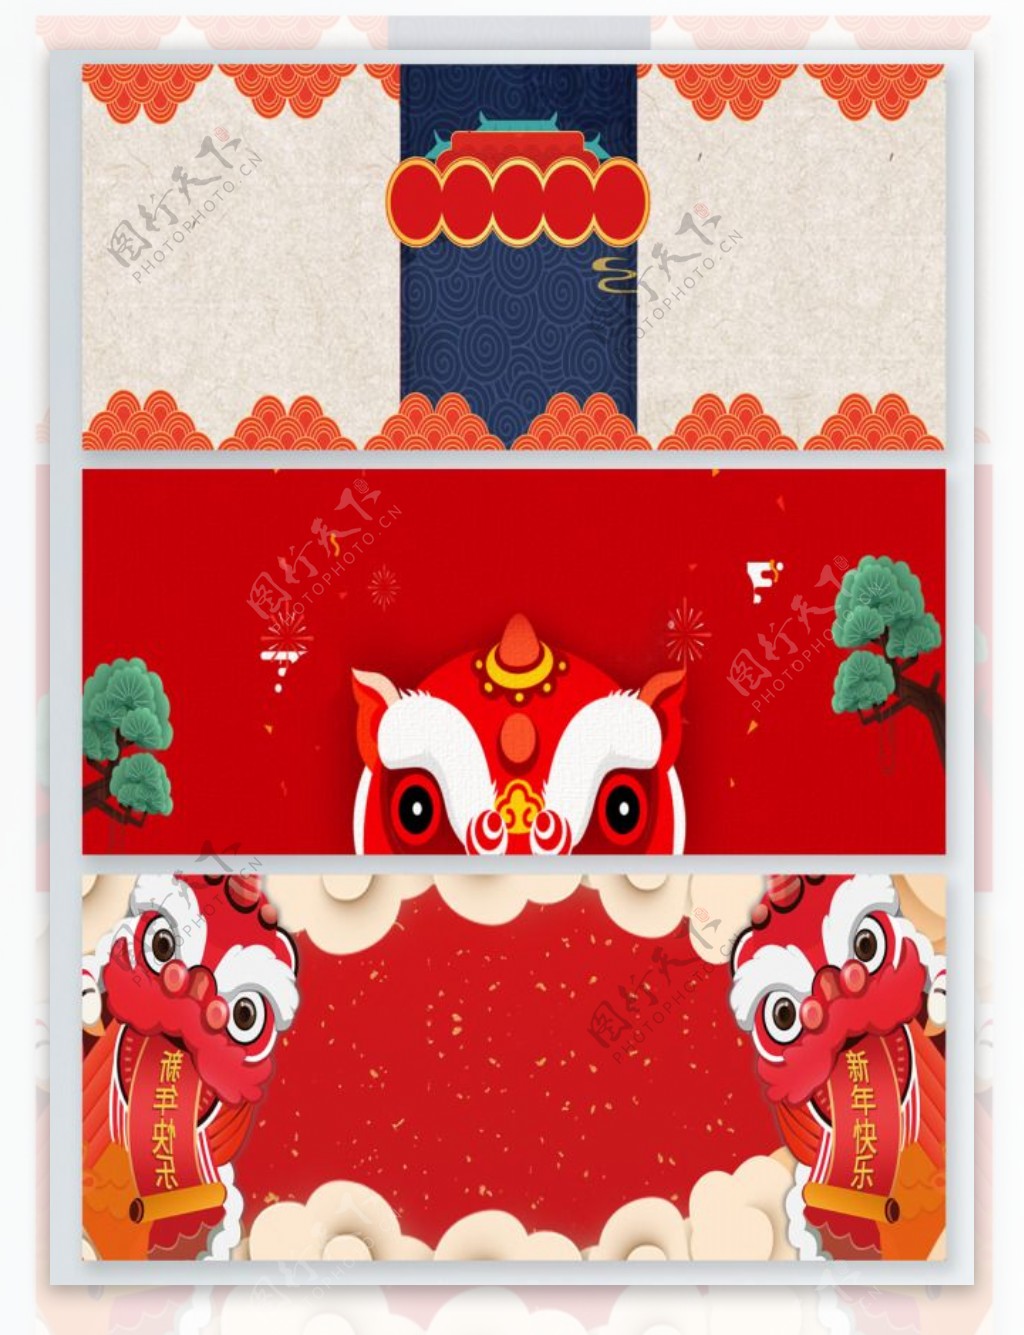 中国舞狮红色海报banner背景图